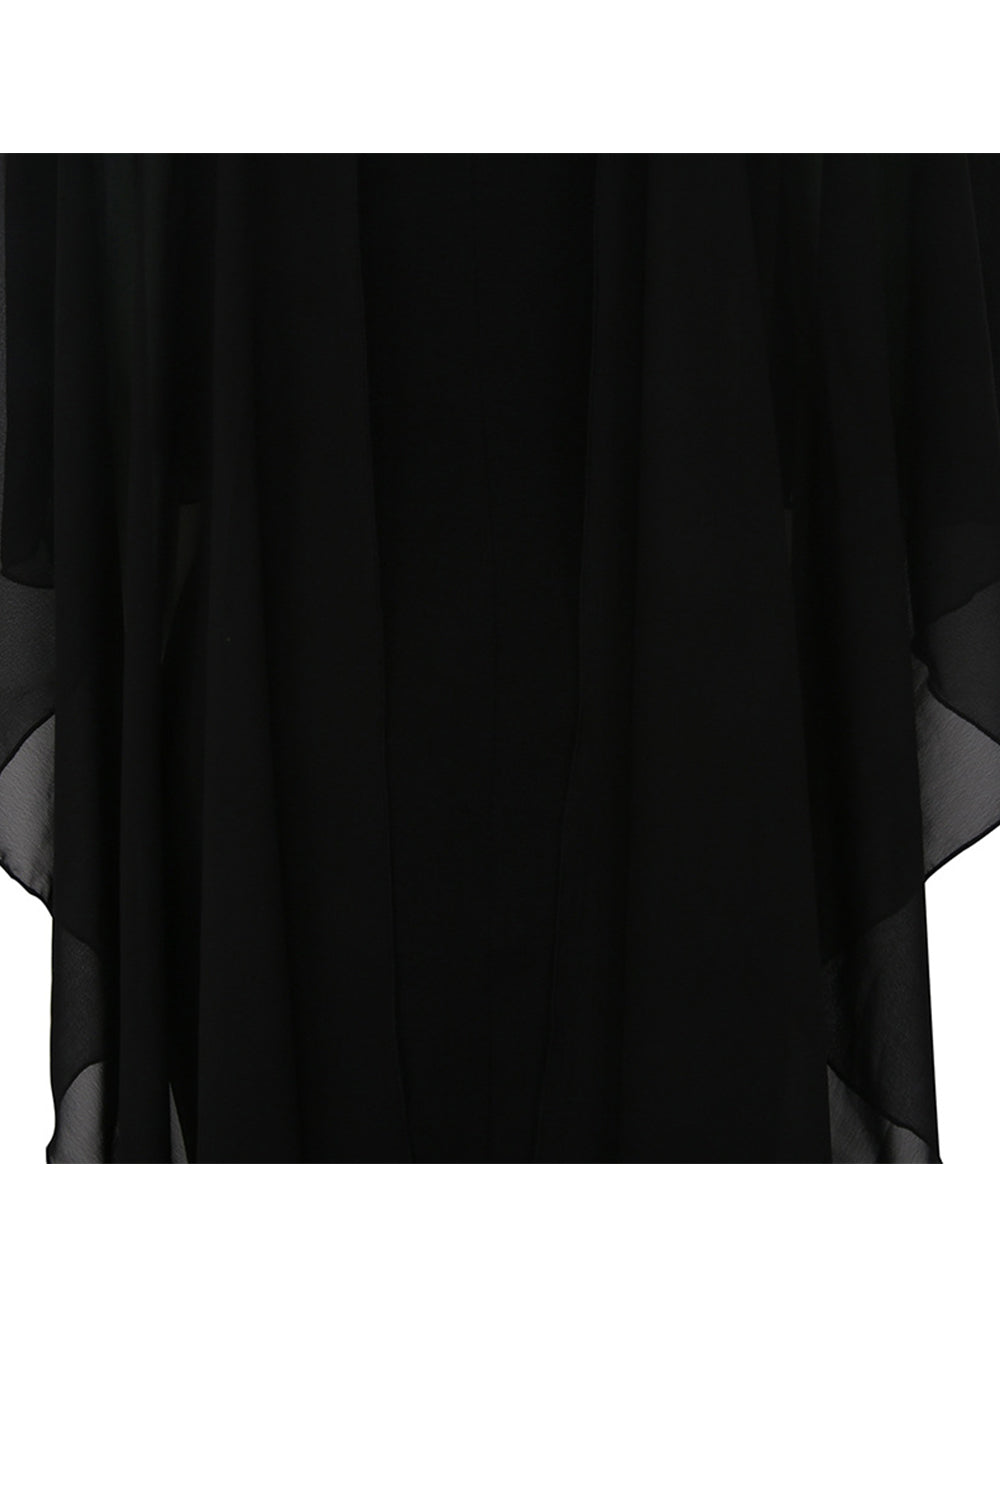 Ketty More Women Comfortable High Quality Fashionable Black Dress-KMWD049